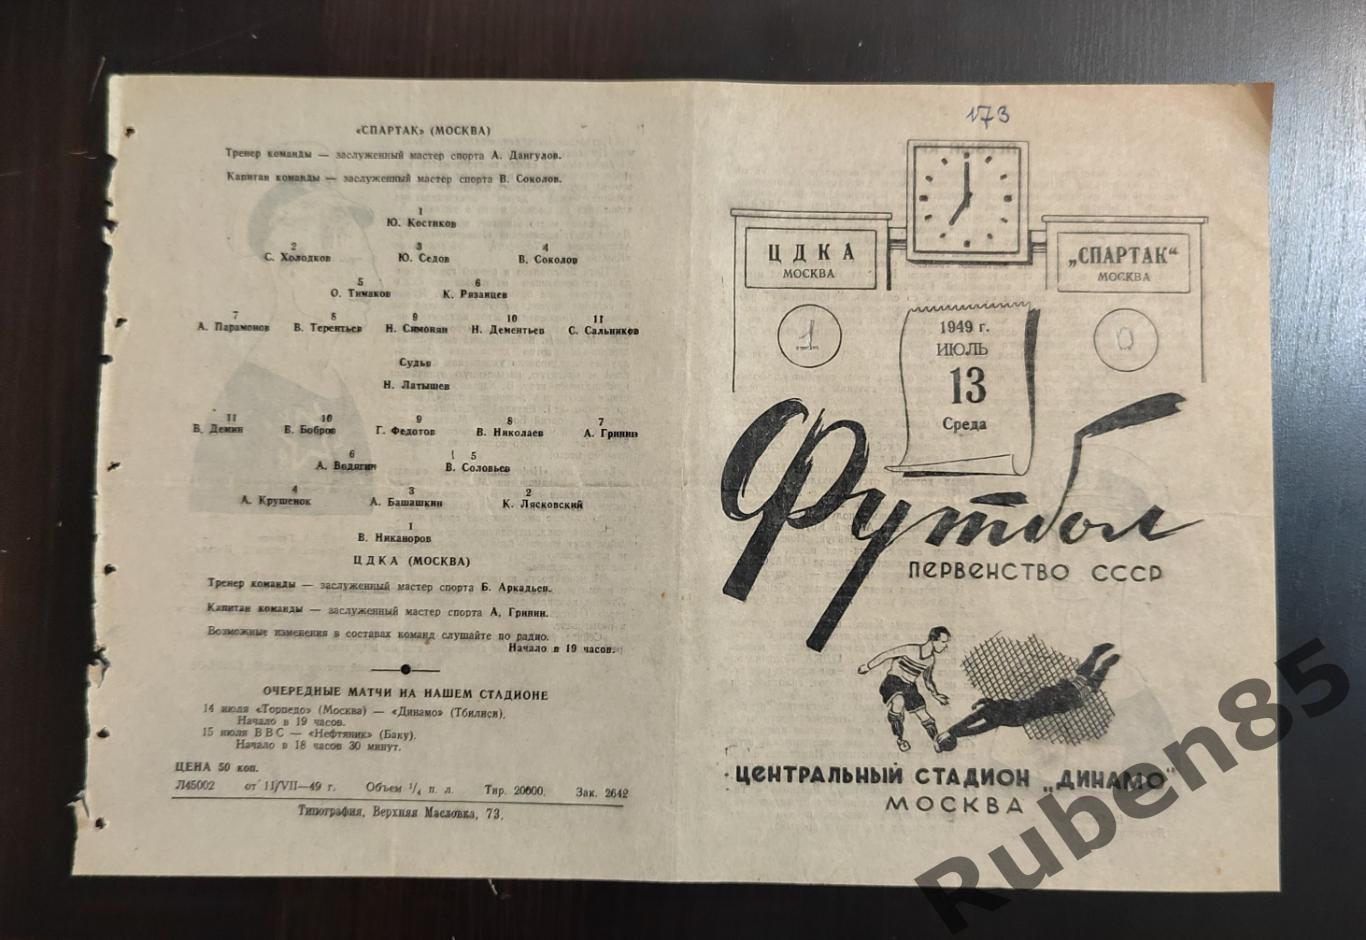 Программа ЦДКА - Спартак Москва 13.07 1949 ЦСКА